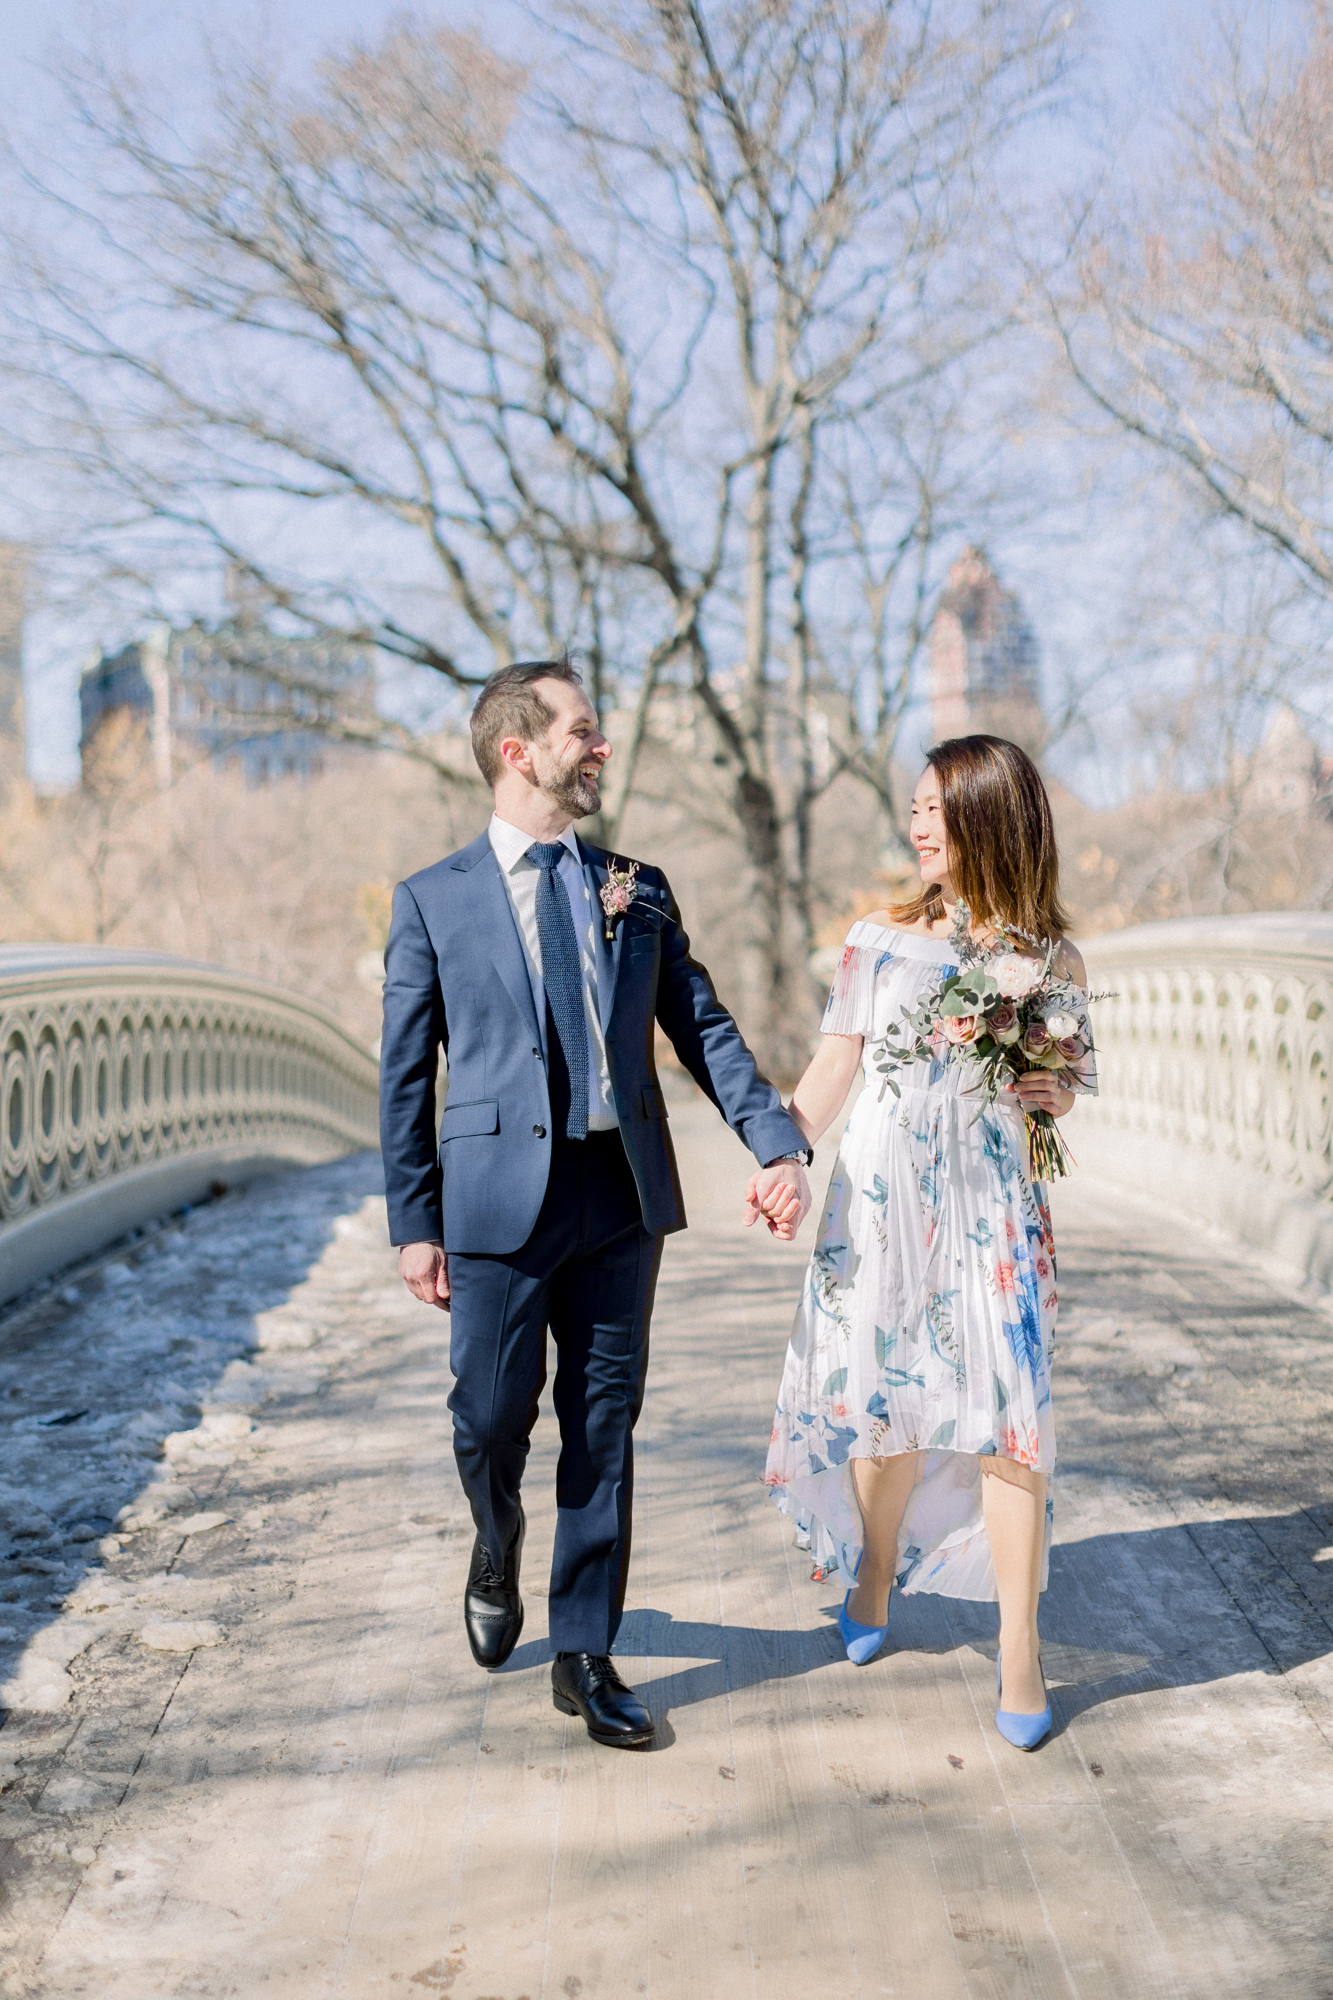 Idyllic Central Park Wedding Photos in Wintery New York